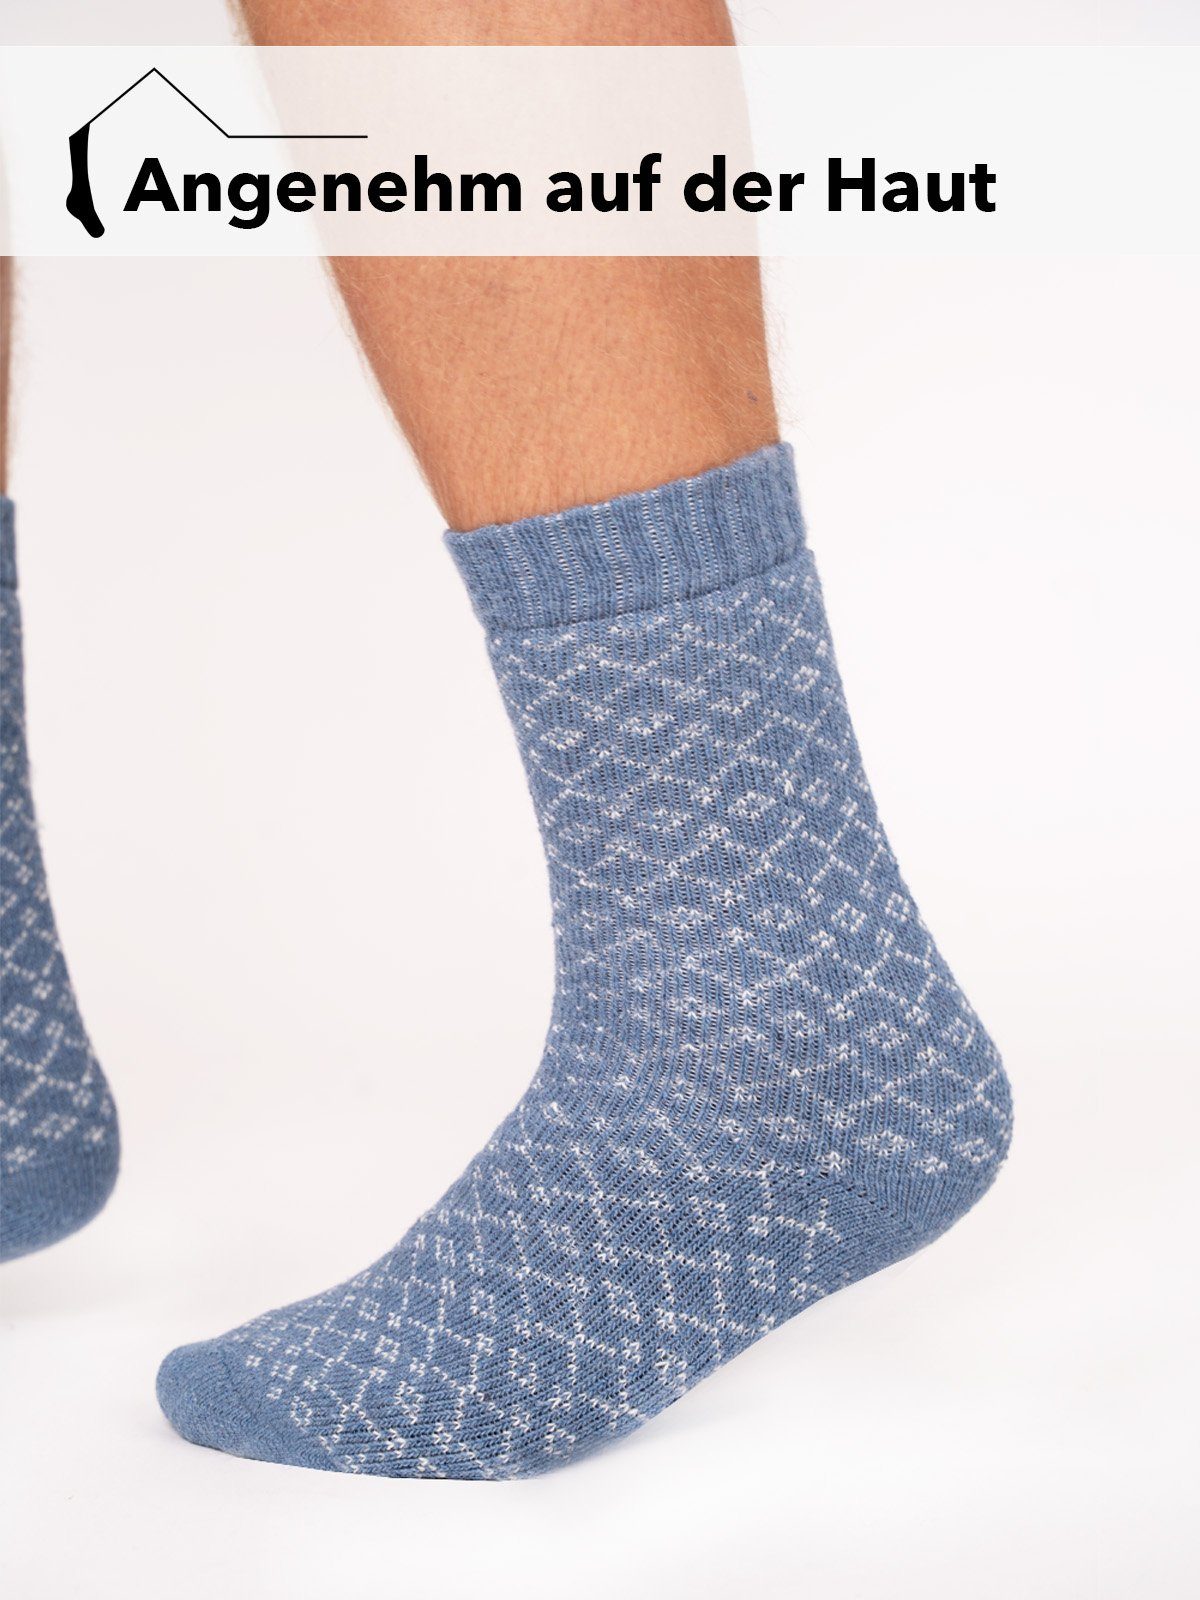 45% Dicke Herren Socken HomeOfSocks & Bunten In Design Mit Warm Wolle Dick Petrol Hygge Socken mit Hohem Socken Damen Hyggelig Für Wollanteil